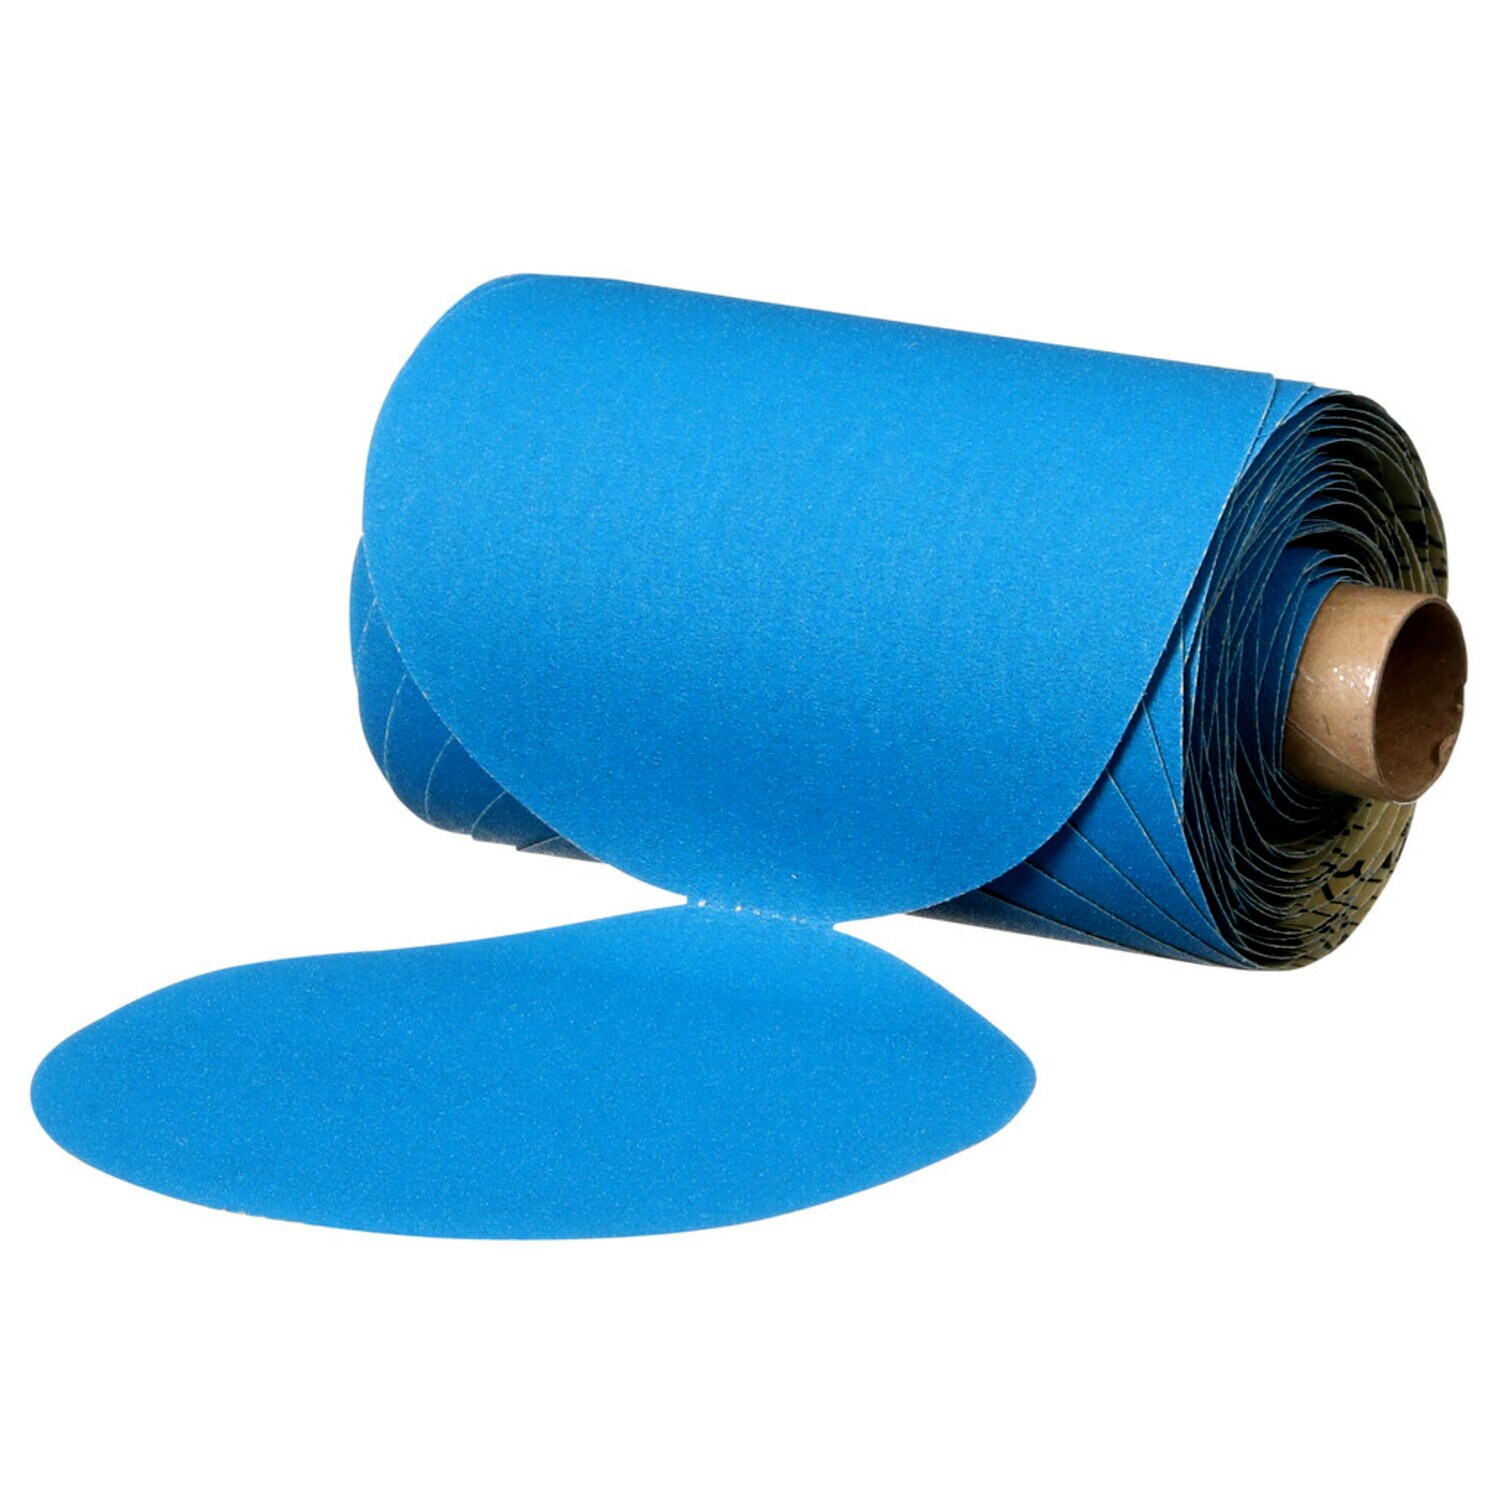 7100199703 - 3M Stikit Blue Abrasive Disc Roll, 36268, 5 in, 180 grade, No Hole, 100 discs per roll, 5 rolls per case